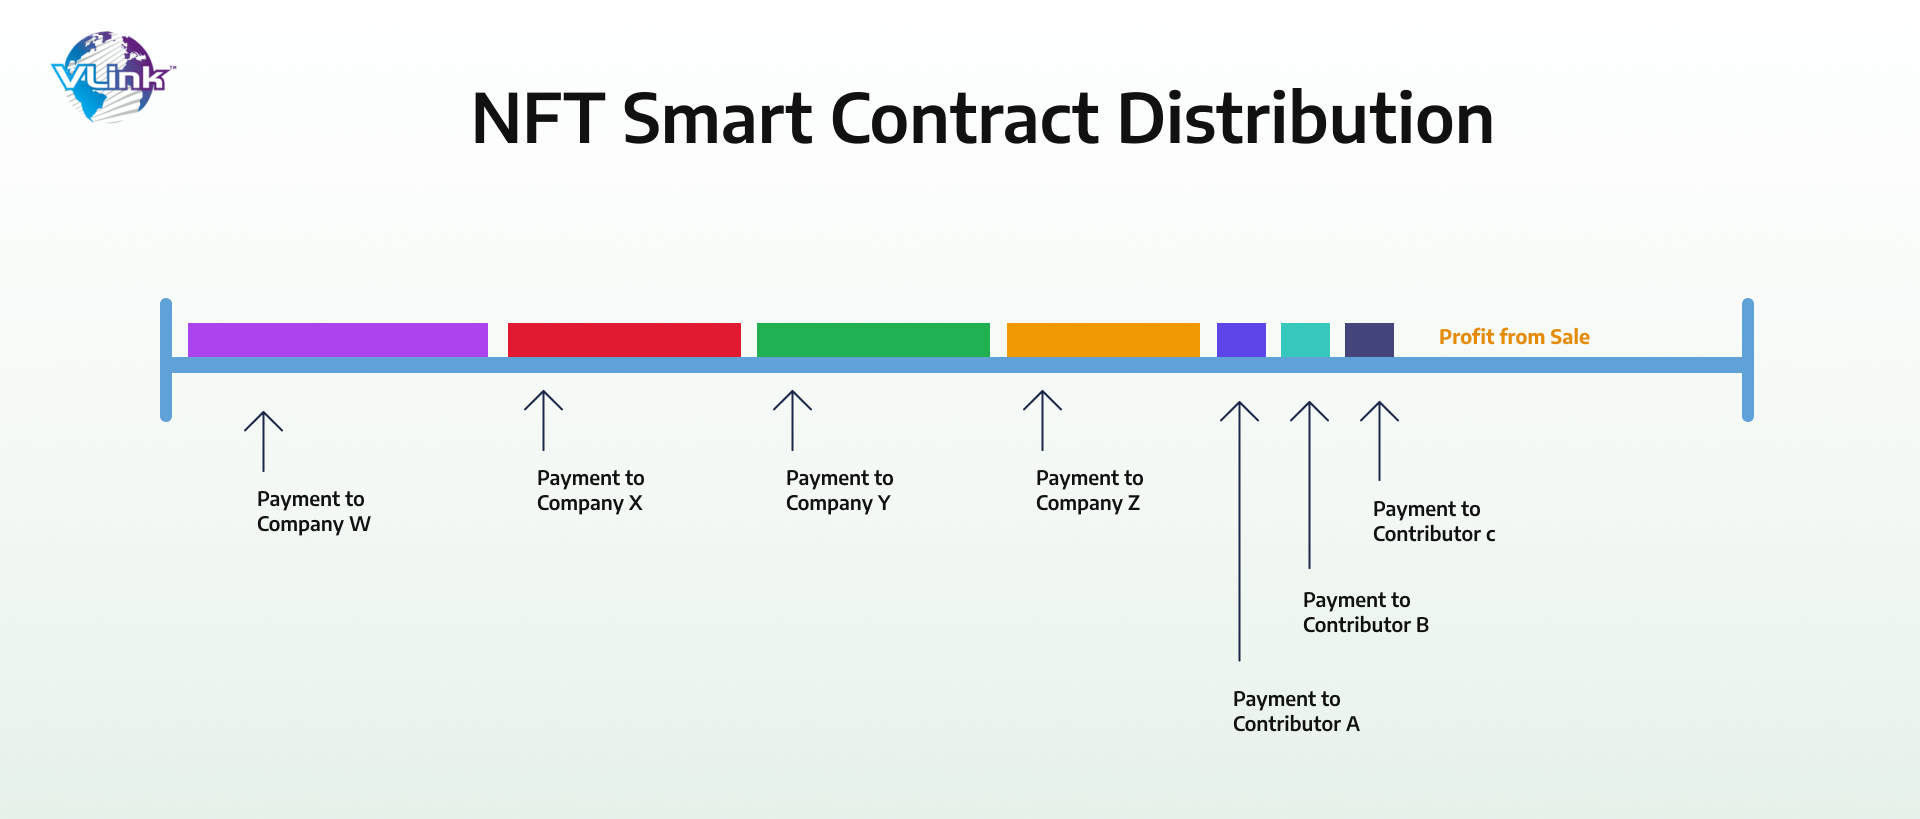 NFT Smart Contract Distribution